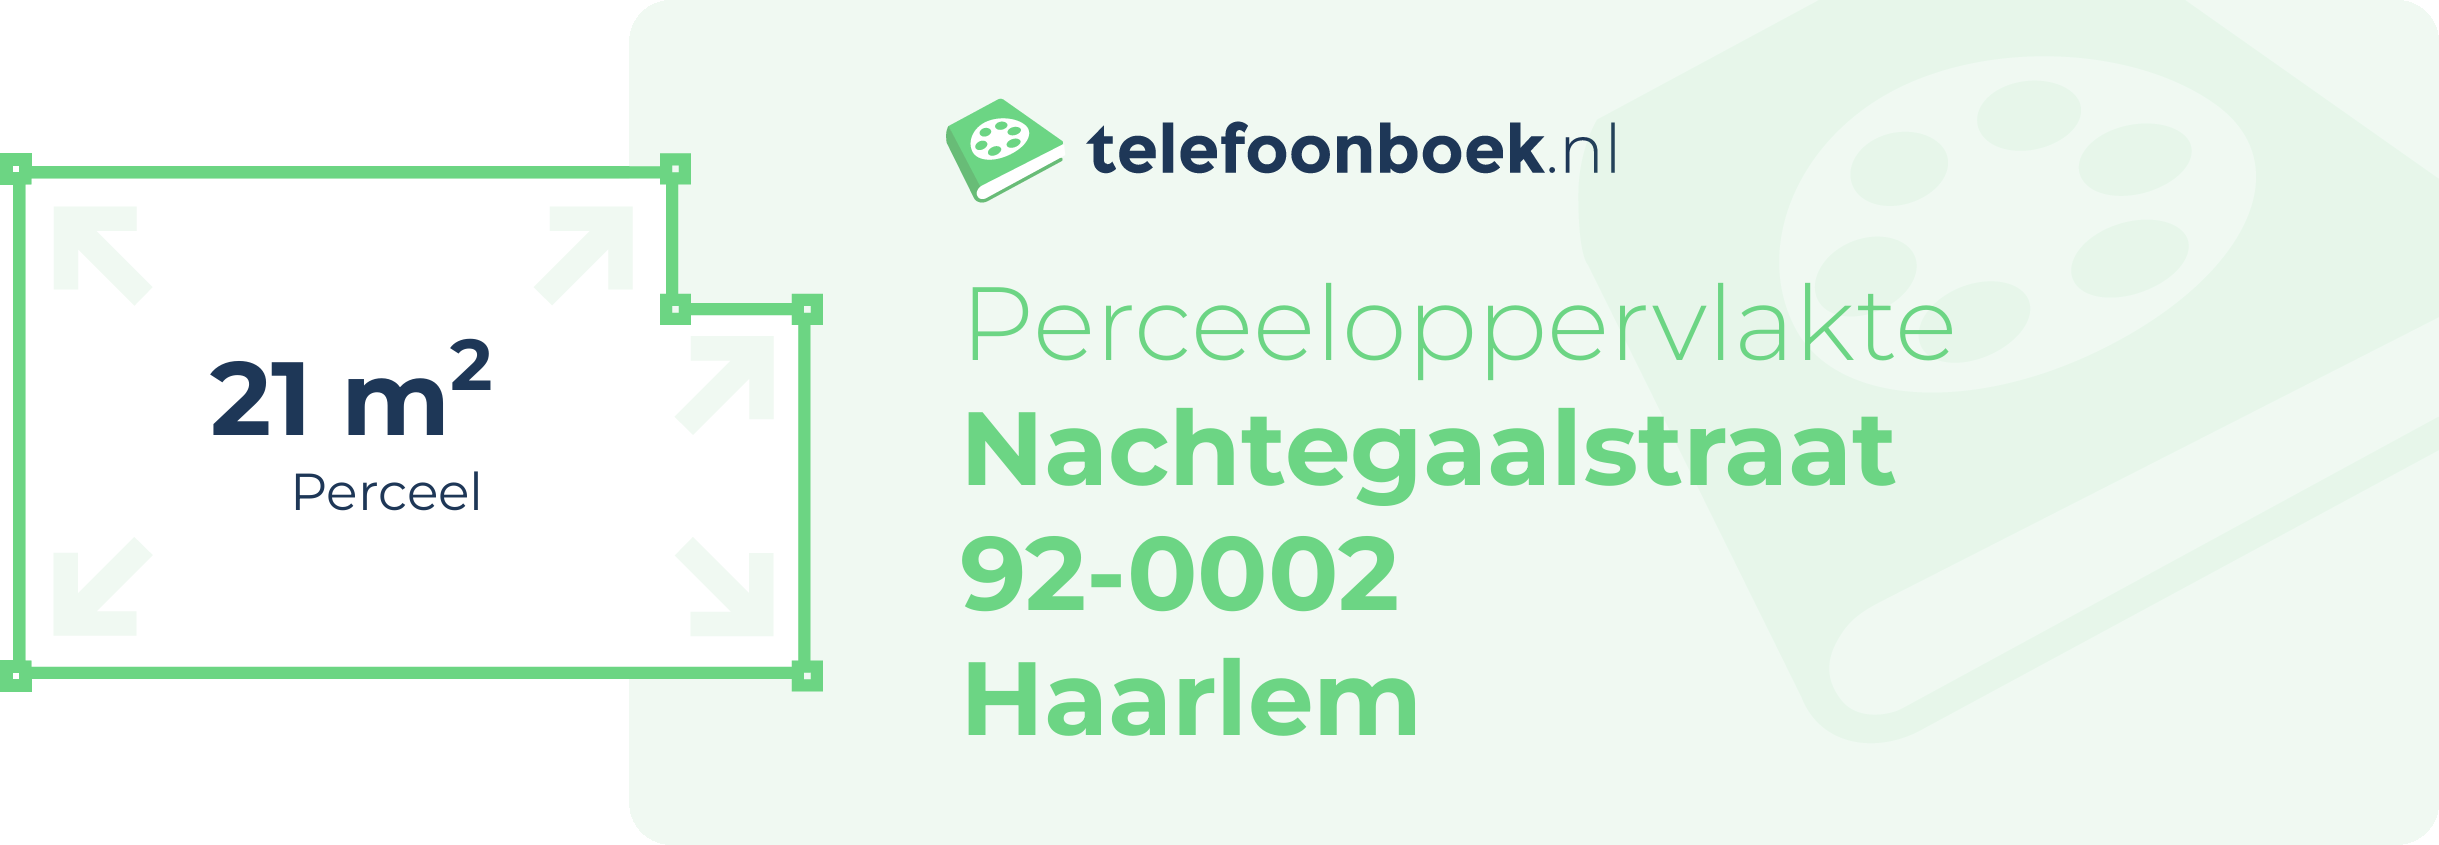 Perceeloppervlakte Nachtegaalstraat 92-0002 Haarlem